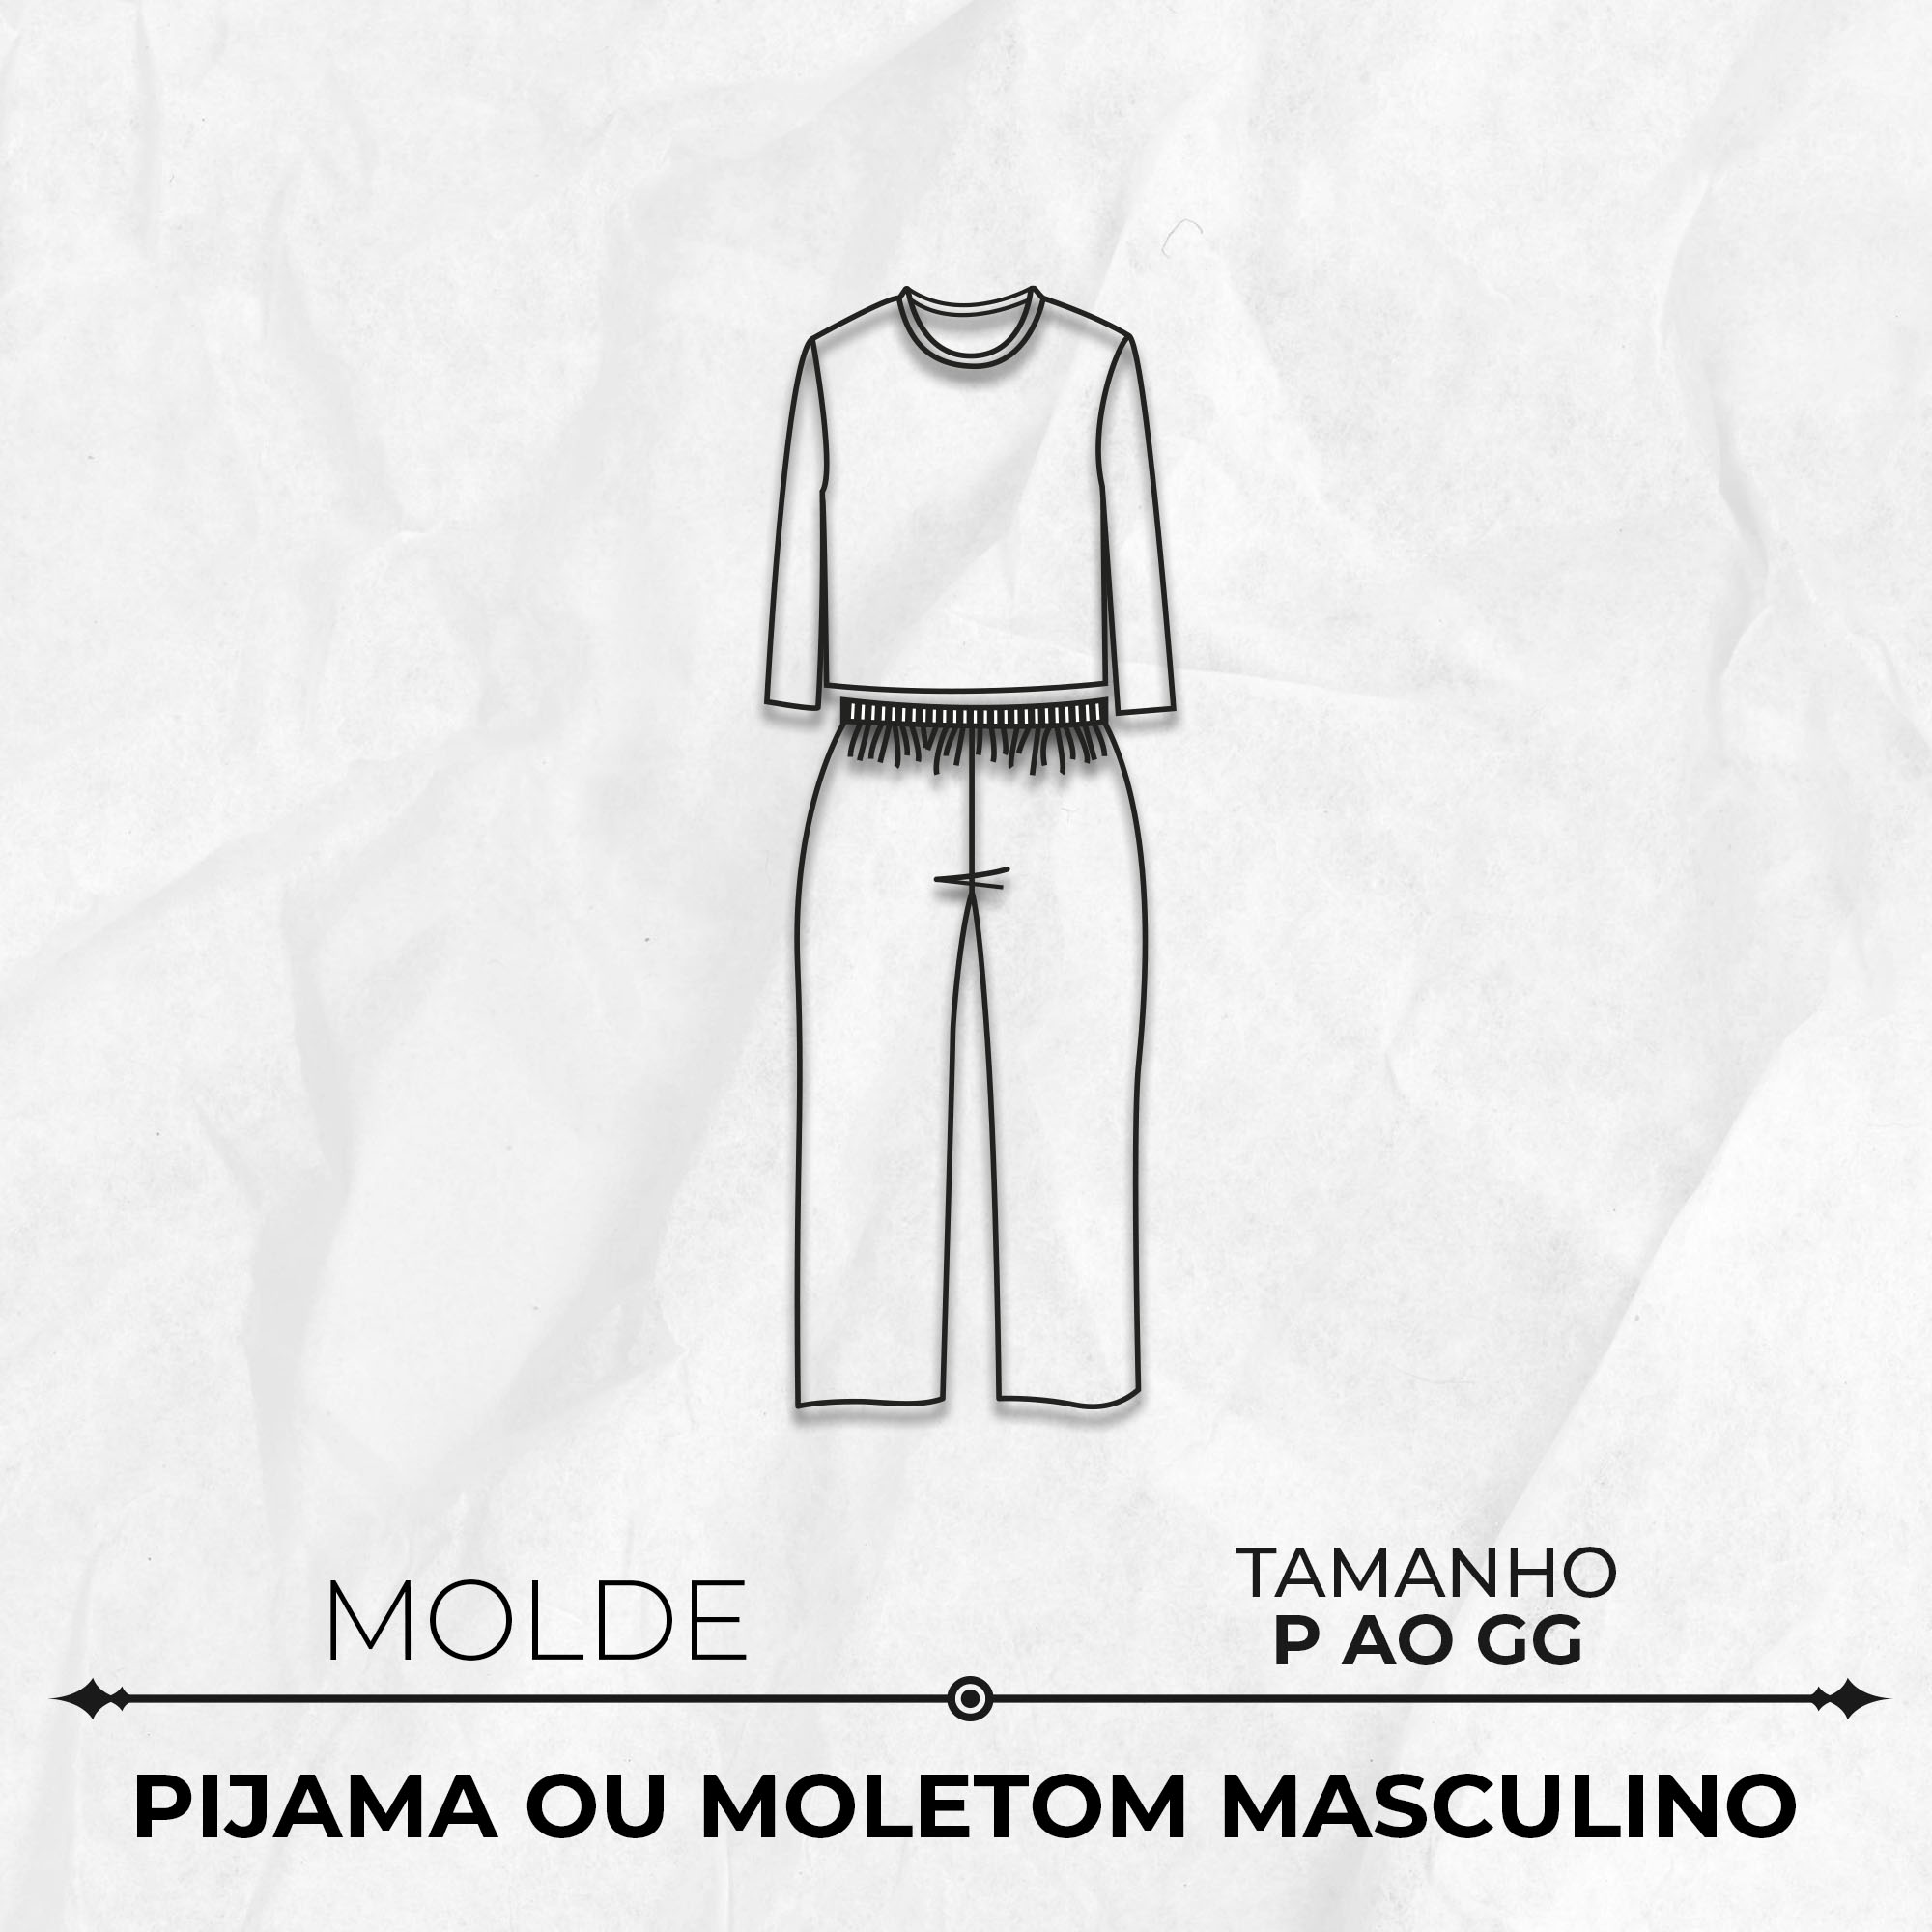 Molde pijama ou moletom masculino tamanho P ao GG by Marlene Mukai